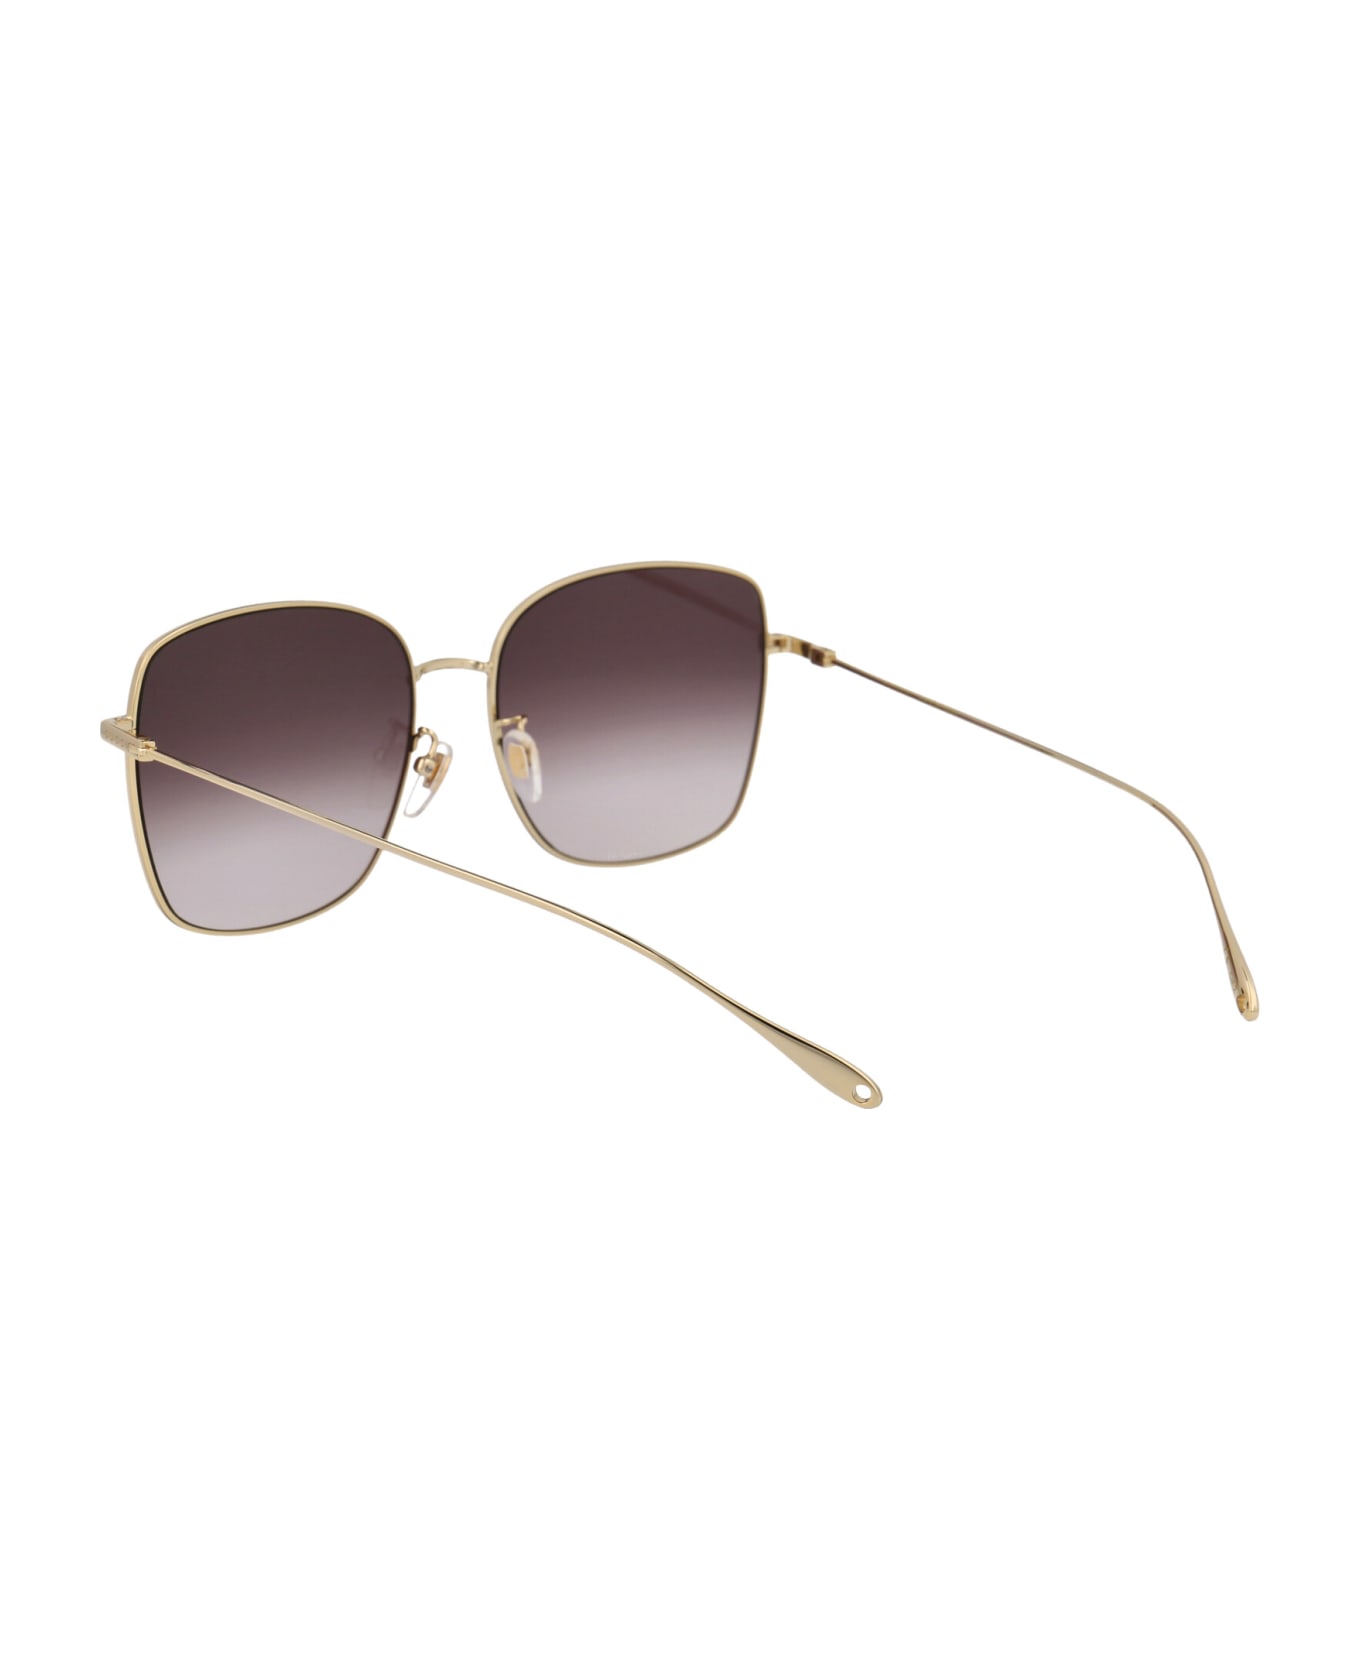 Gucci Eyewear Gg1030sk Sunglasses - 002 GOLD GOLD BROWN サングラス